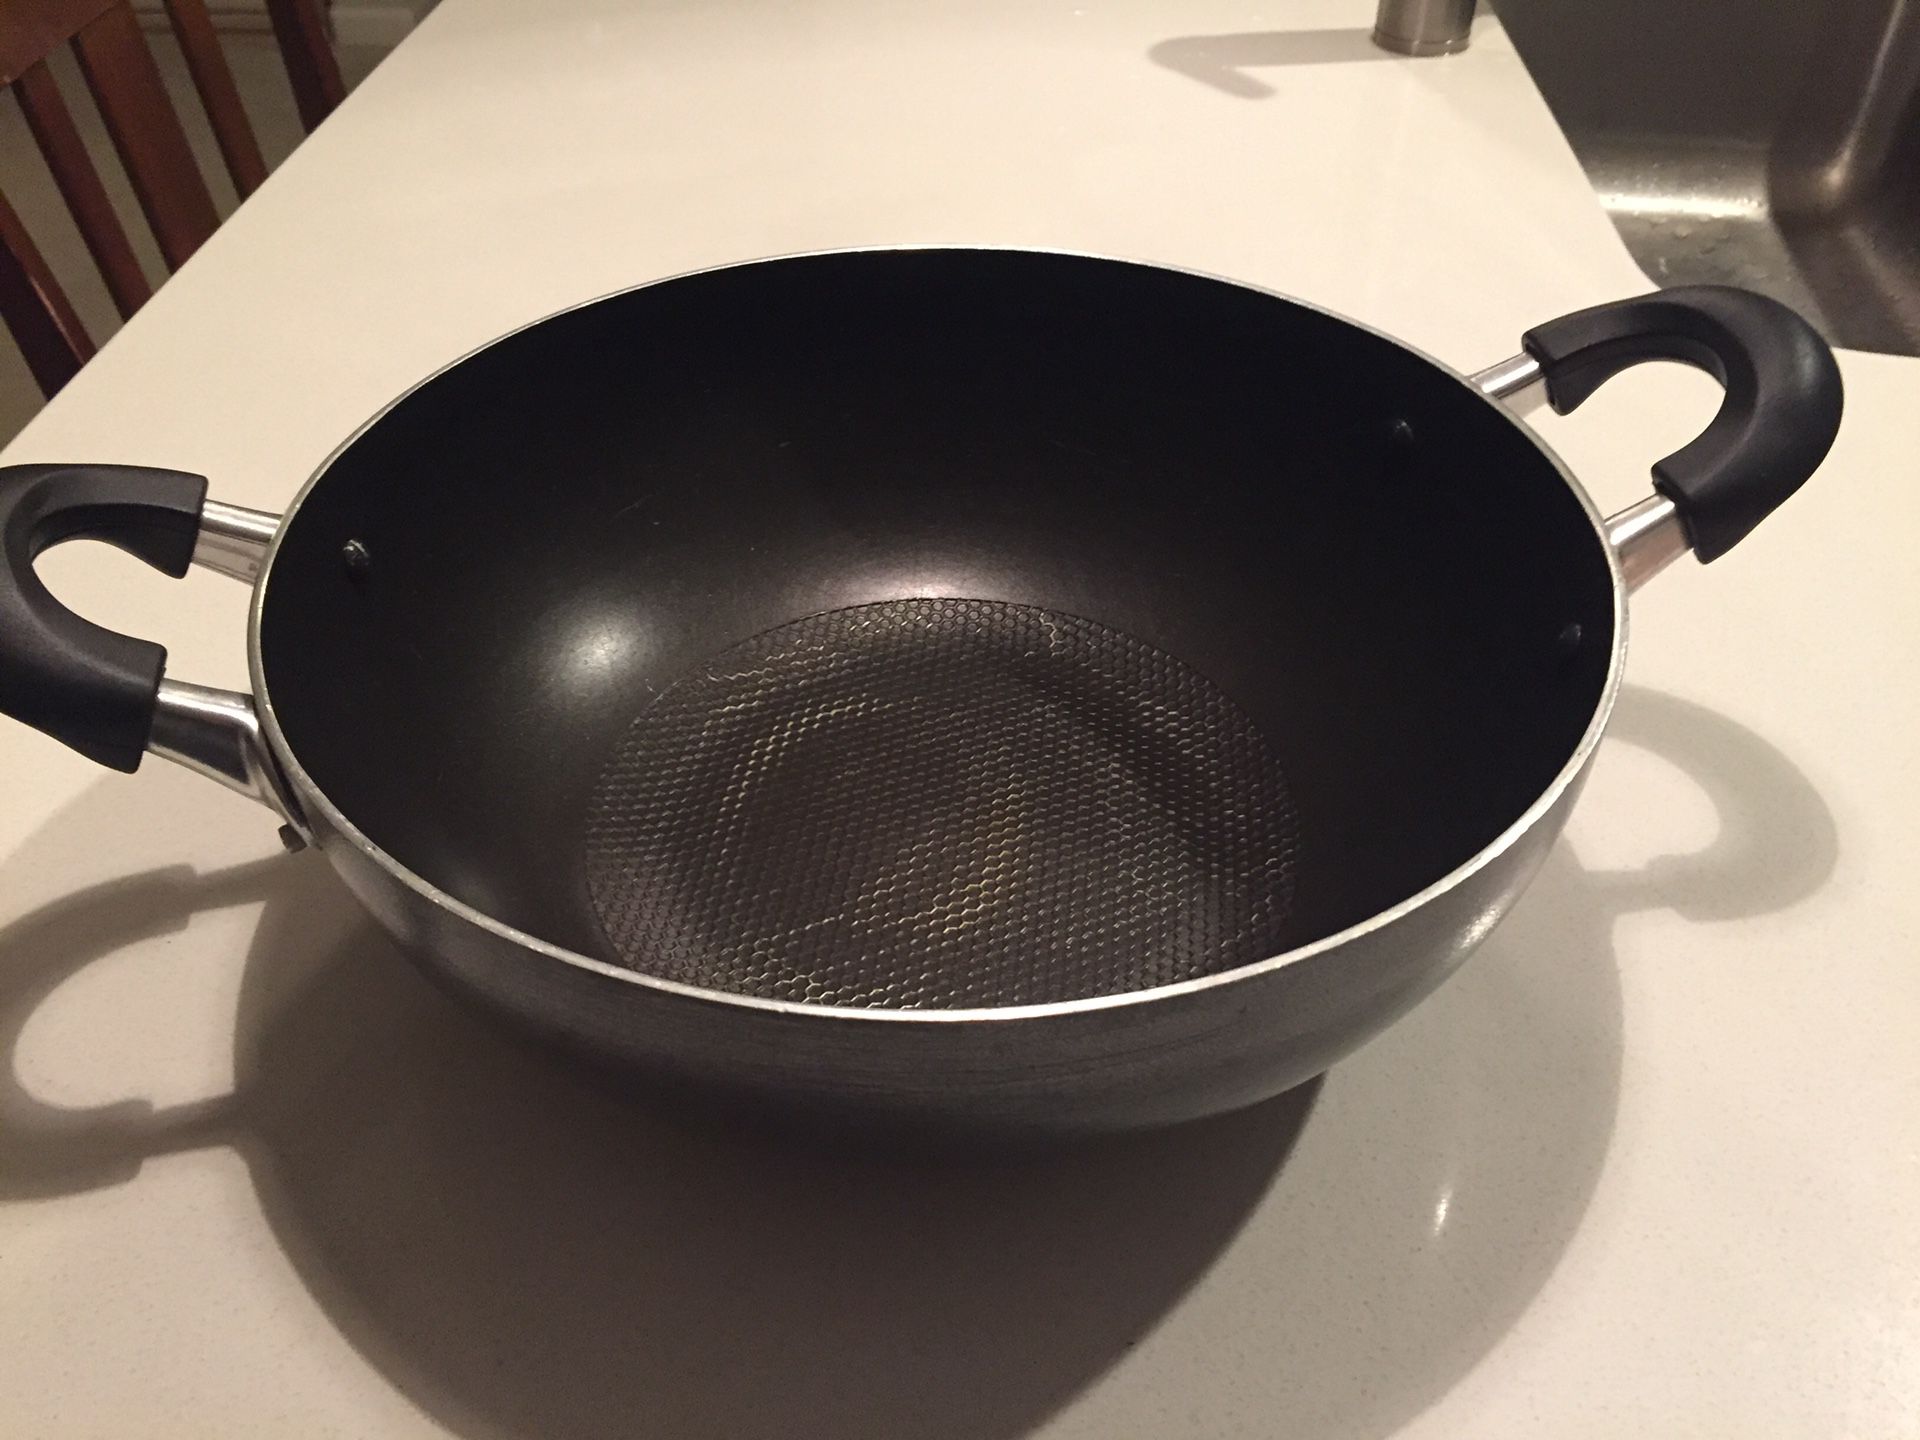 Non-stick cooking pan